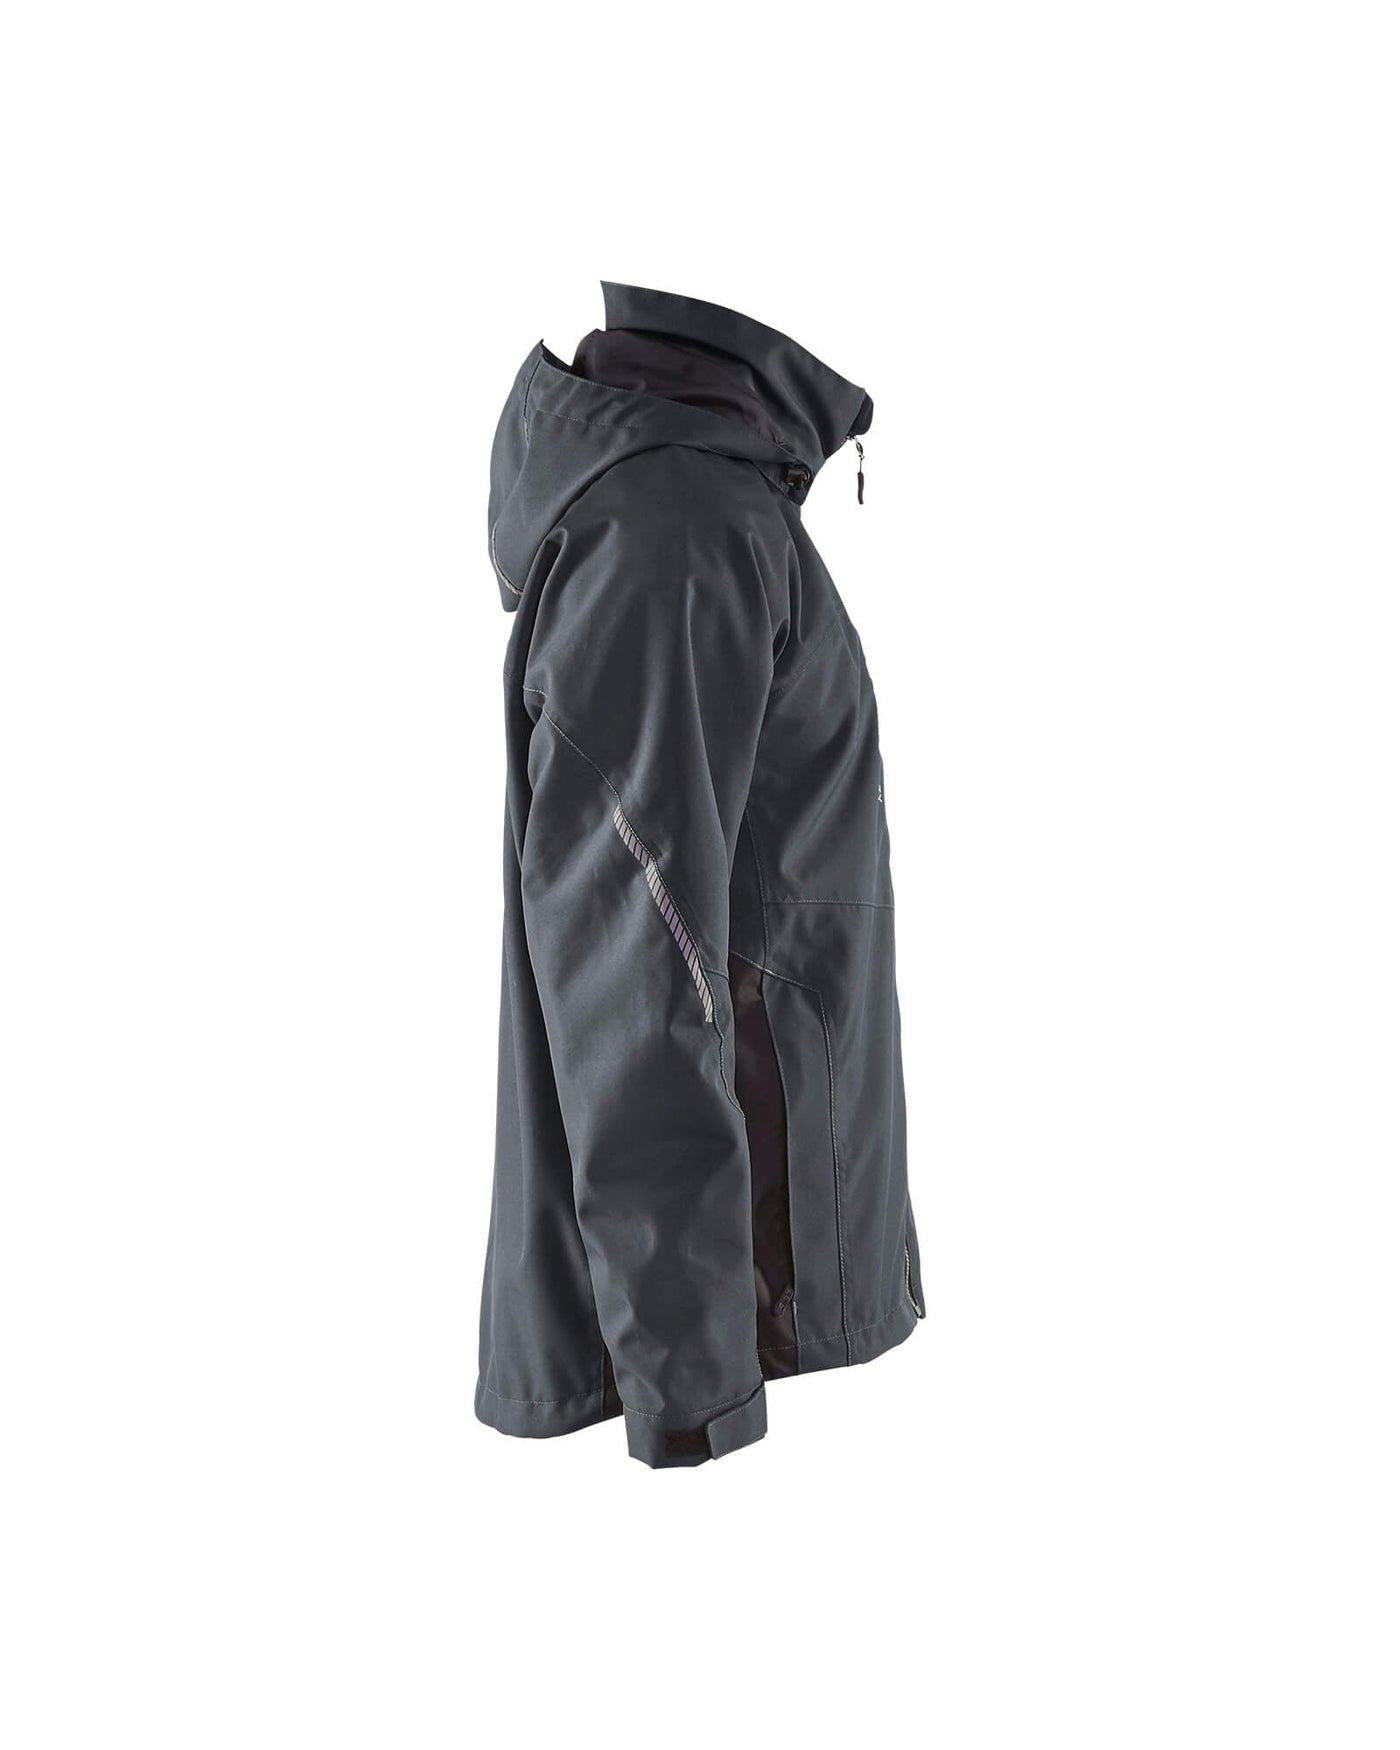 Blaklader 48901977 Functional Jacket Lightweight Lined Dark Grey/Black Right #colour_dark-grey-black